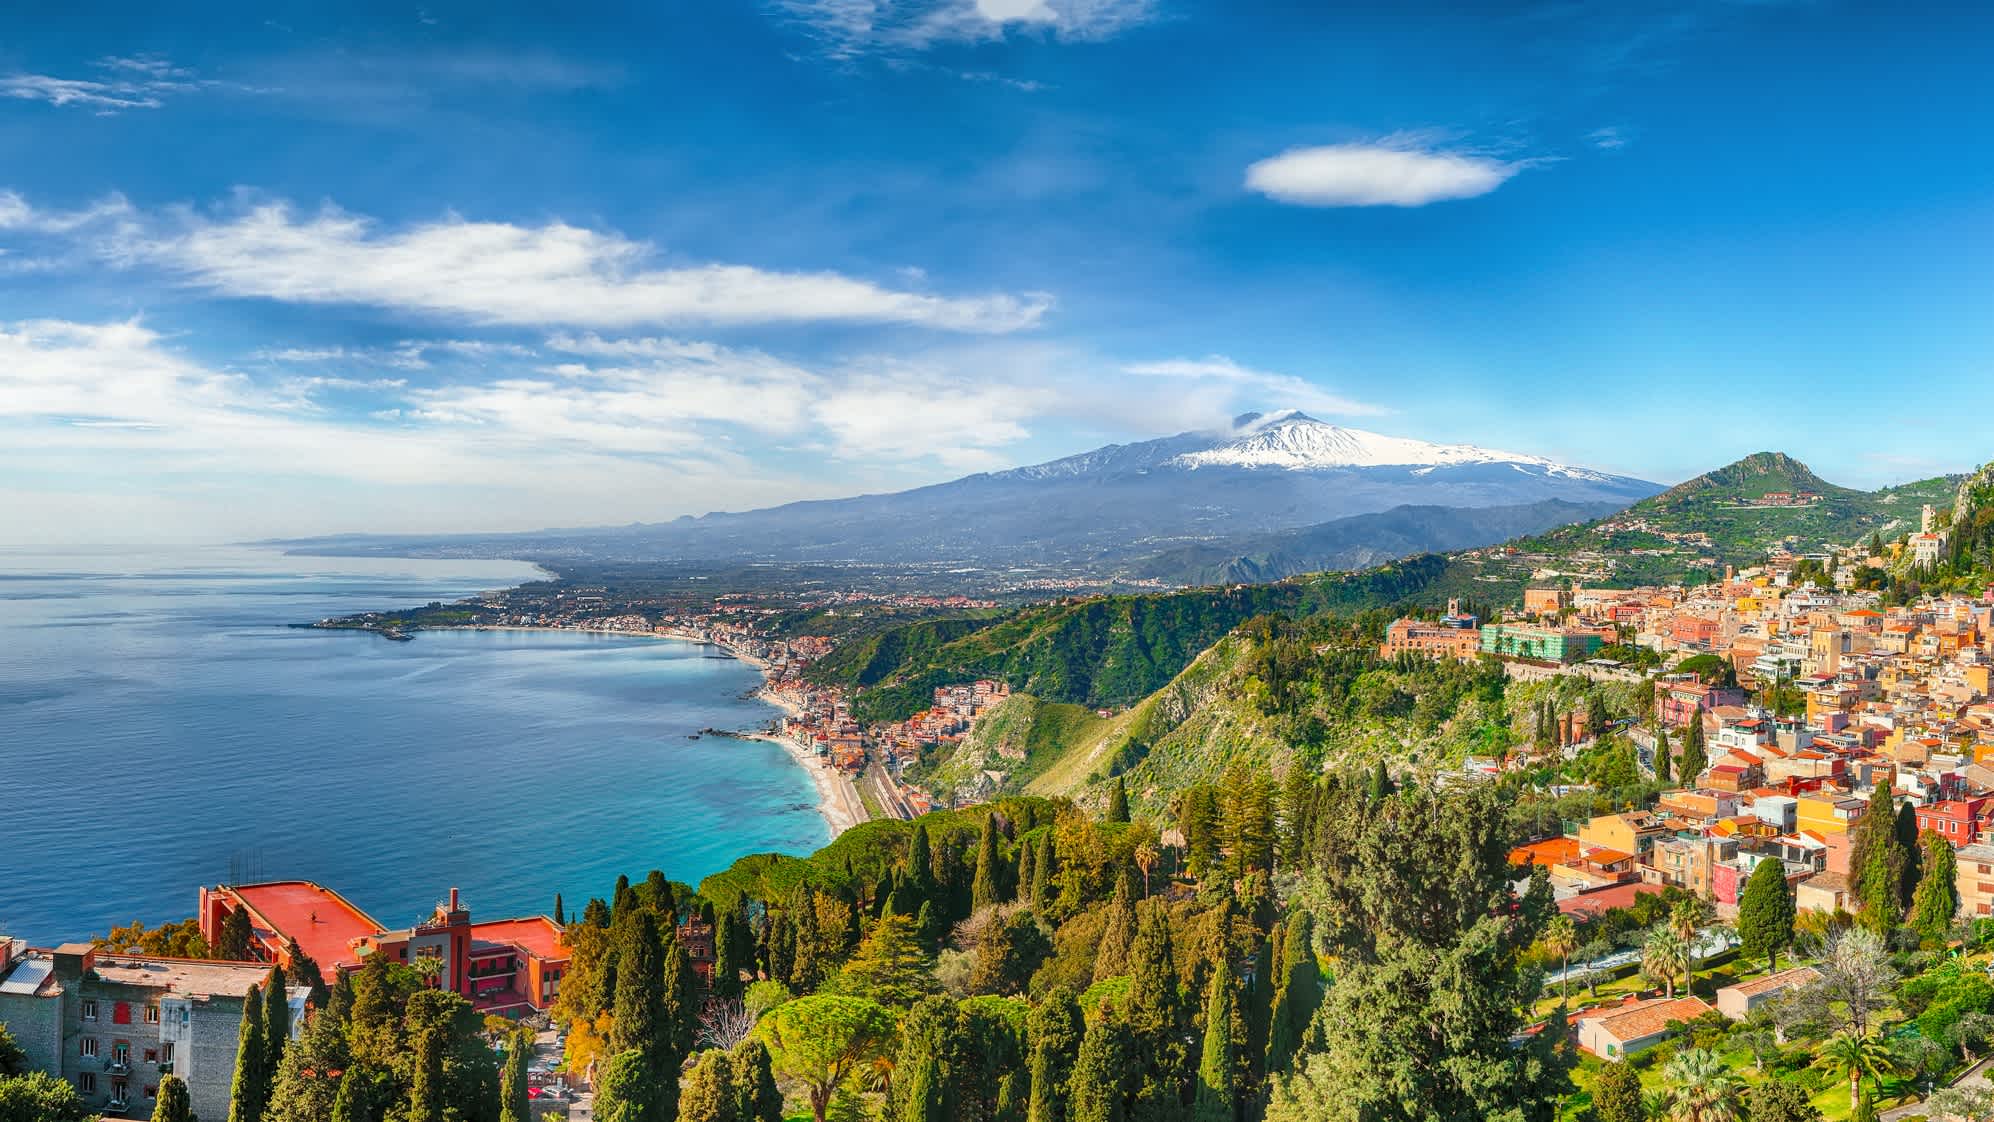 Blick auf Taormina und Ätna Vulkan, Sizilien, Italien.

